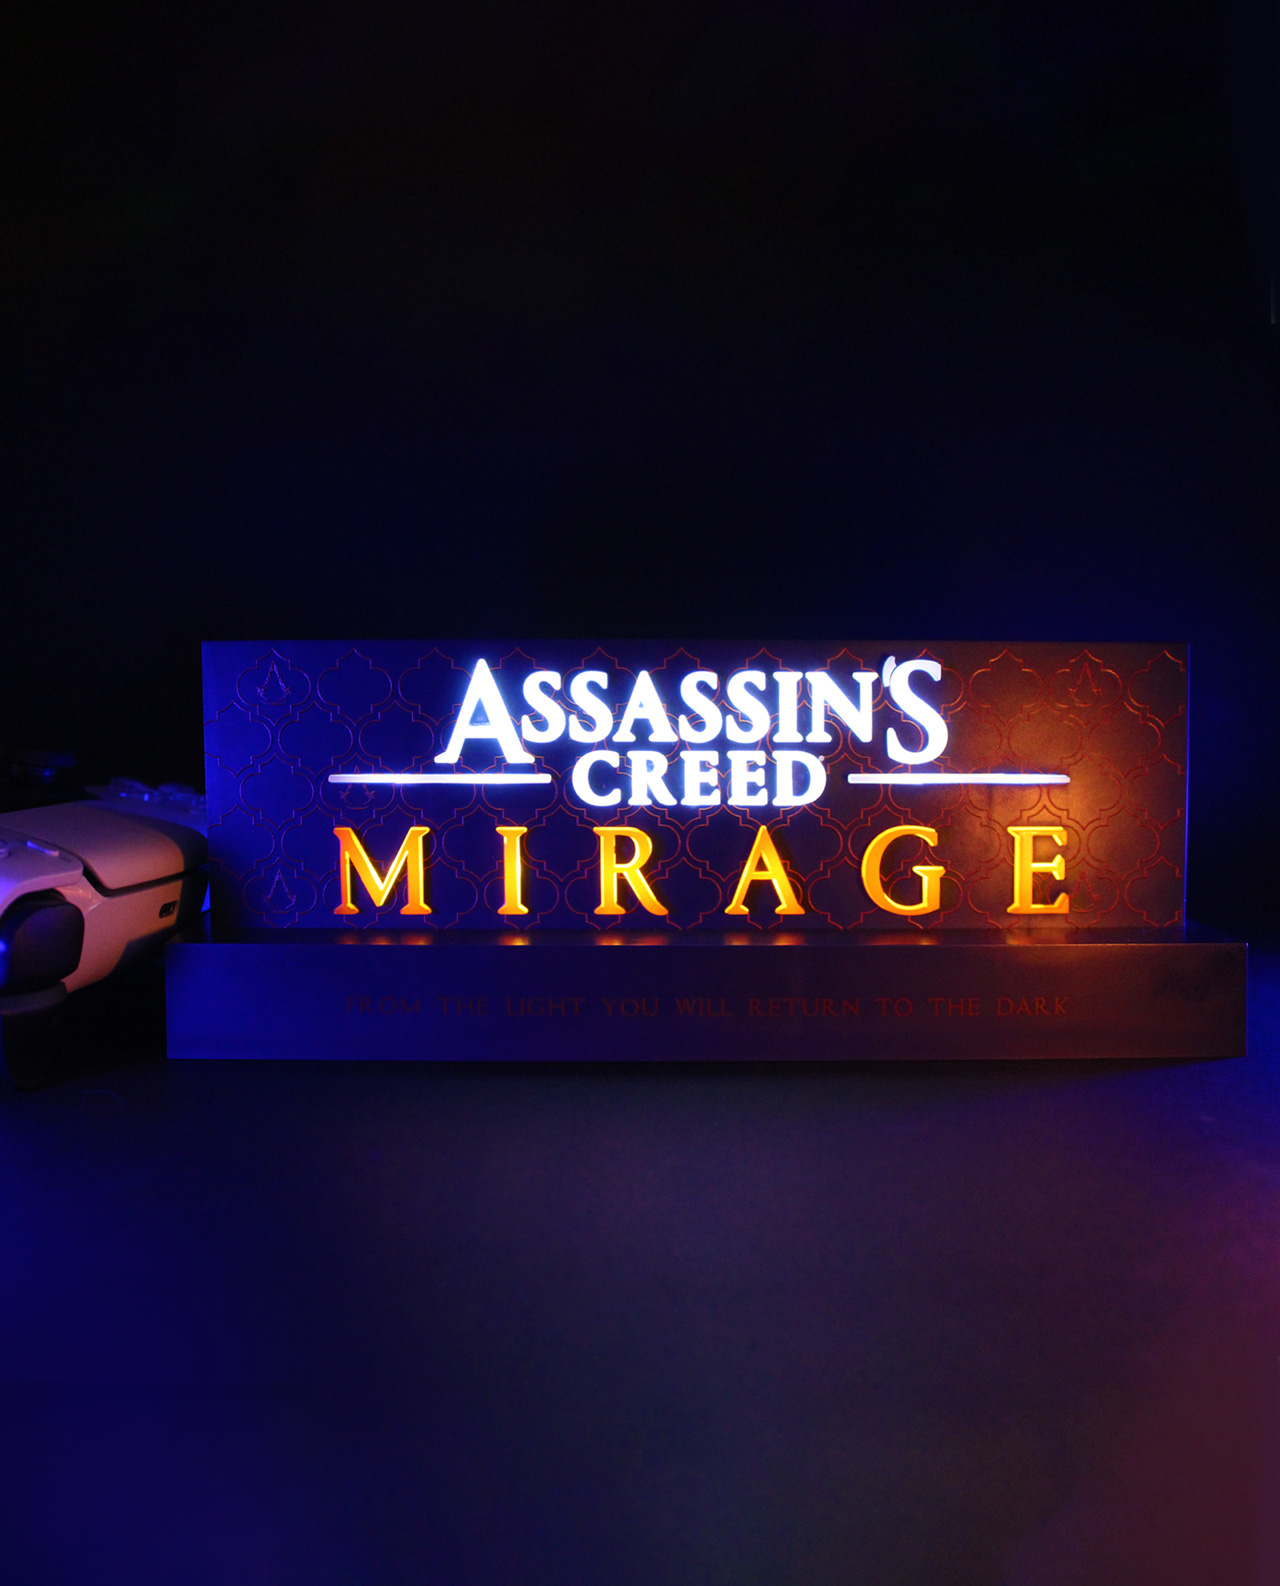 light_logo_assassin’s_creed_ubisoft_neamedia_icons_mirage_games2